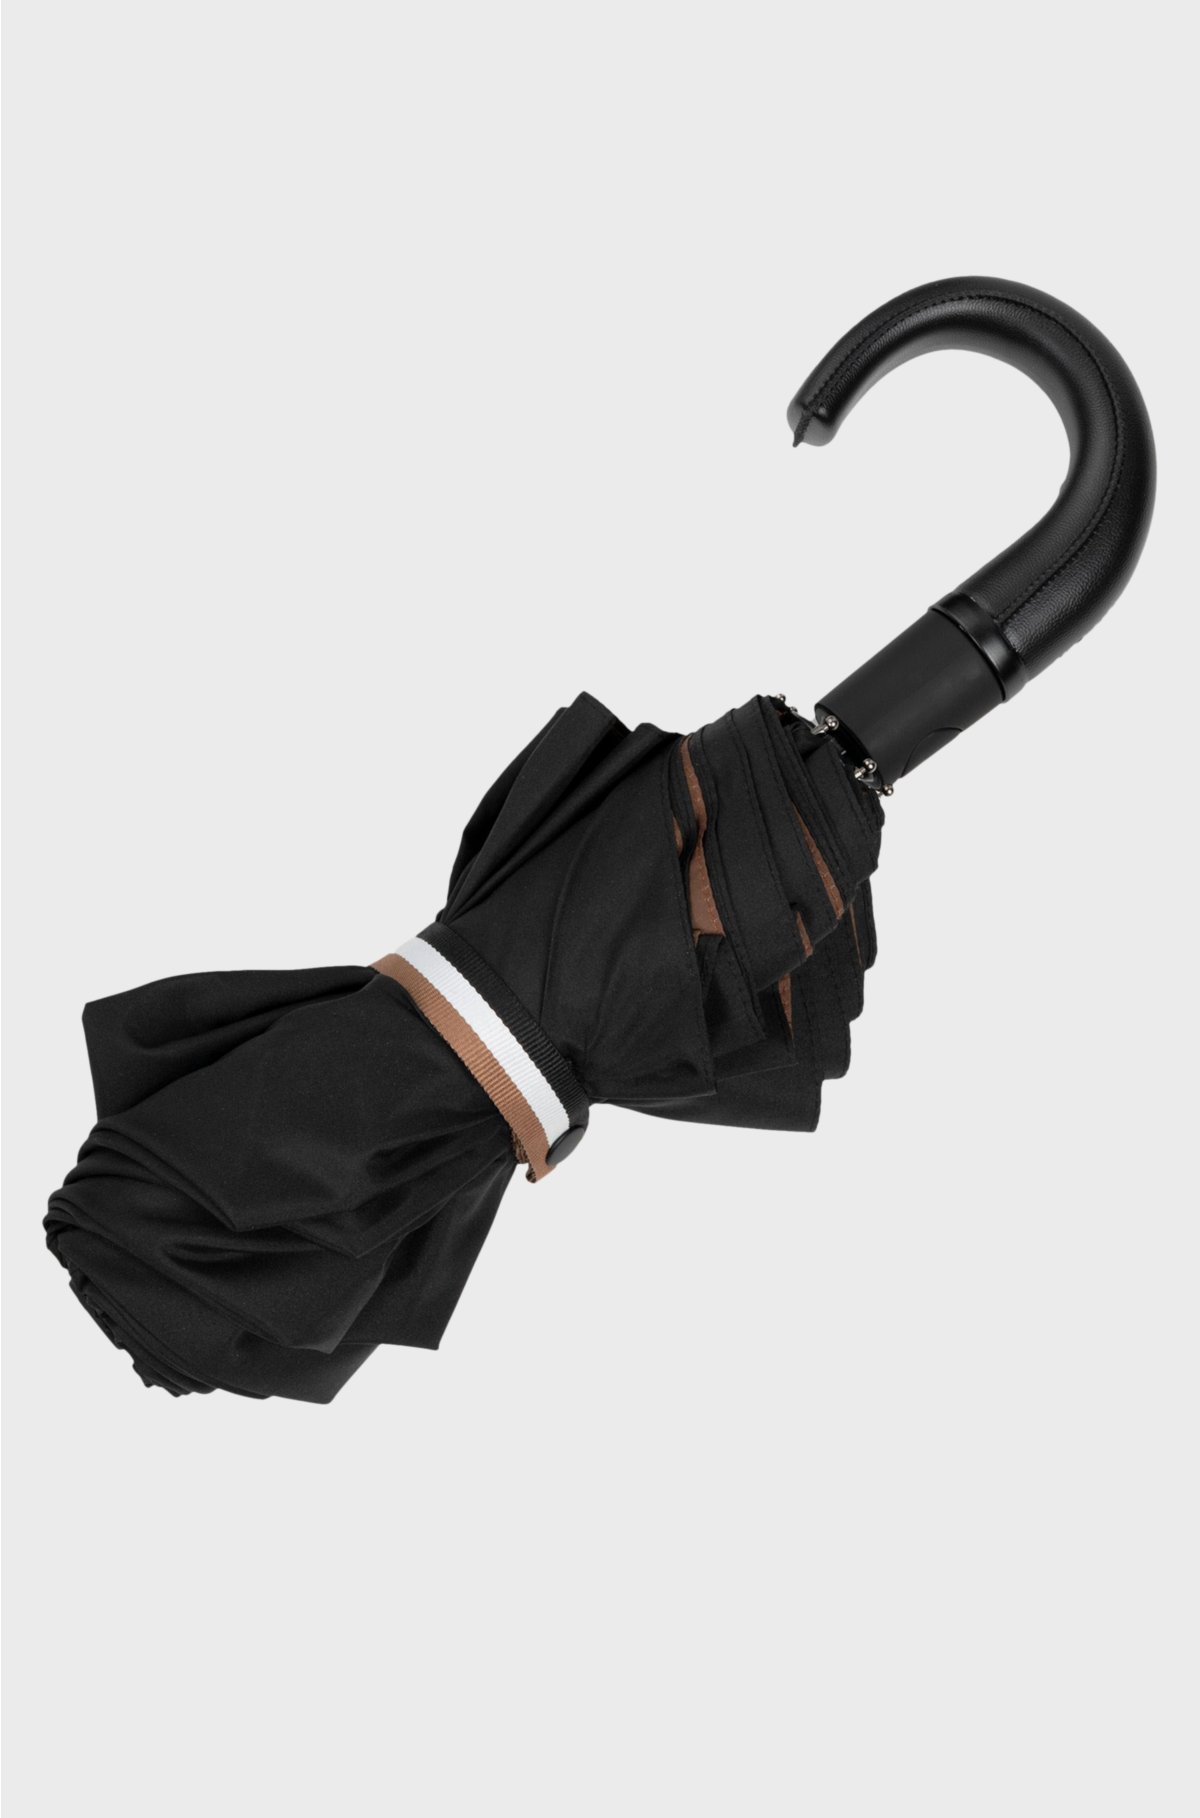 Black pocket umbrella with camel interior, Black